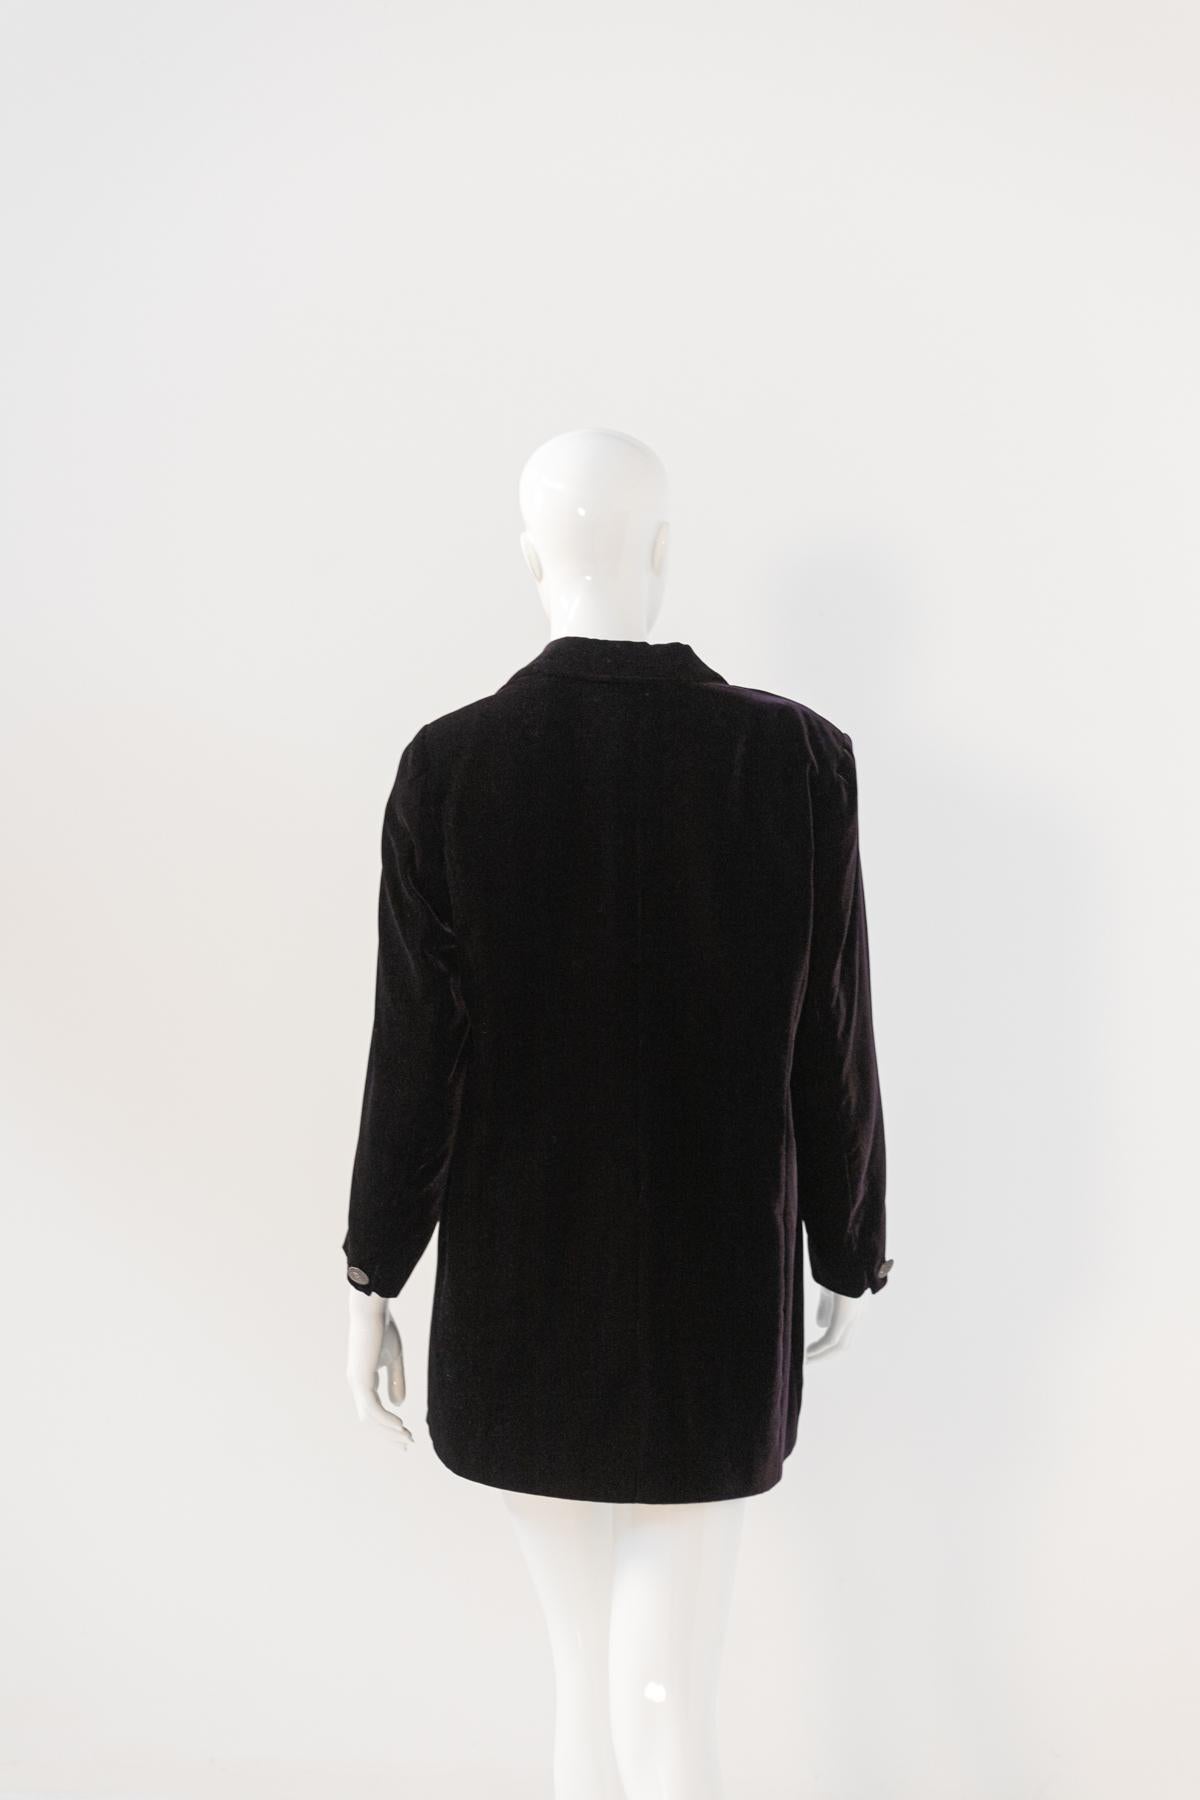 Marina Rinaldi Elegant Italian Jacket For Sale 4